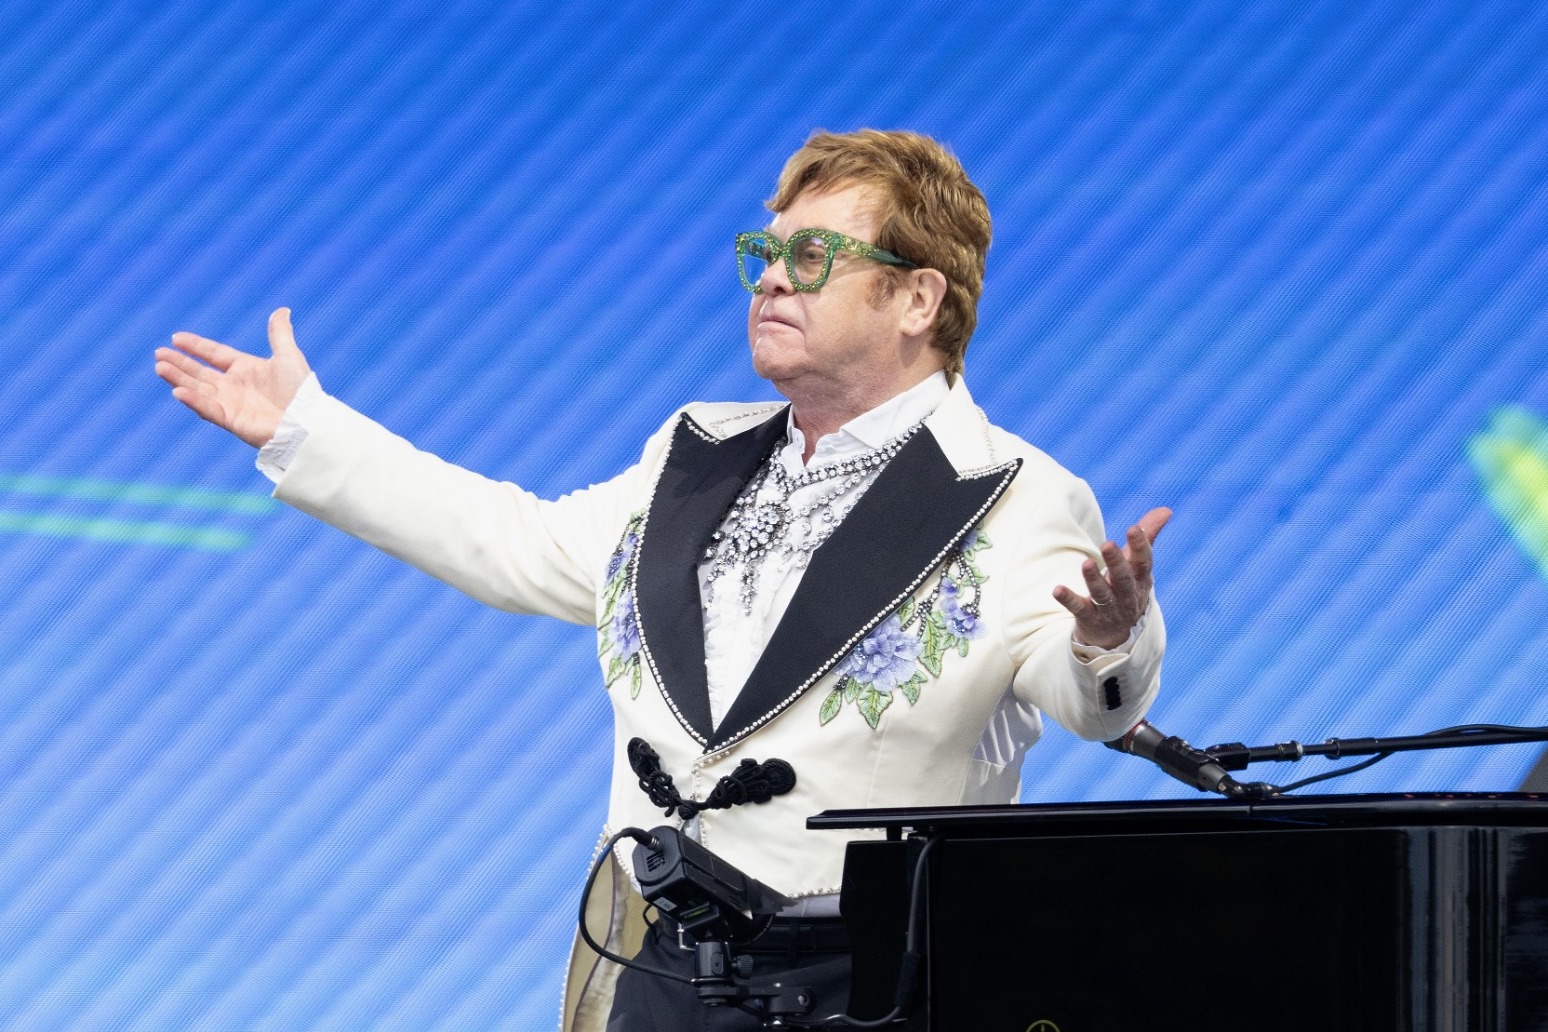 Sir Elton John pays tribute to ‘inspiring’ musicians at final US tour show 